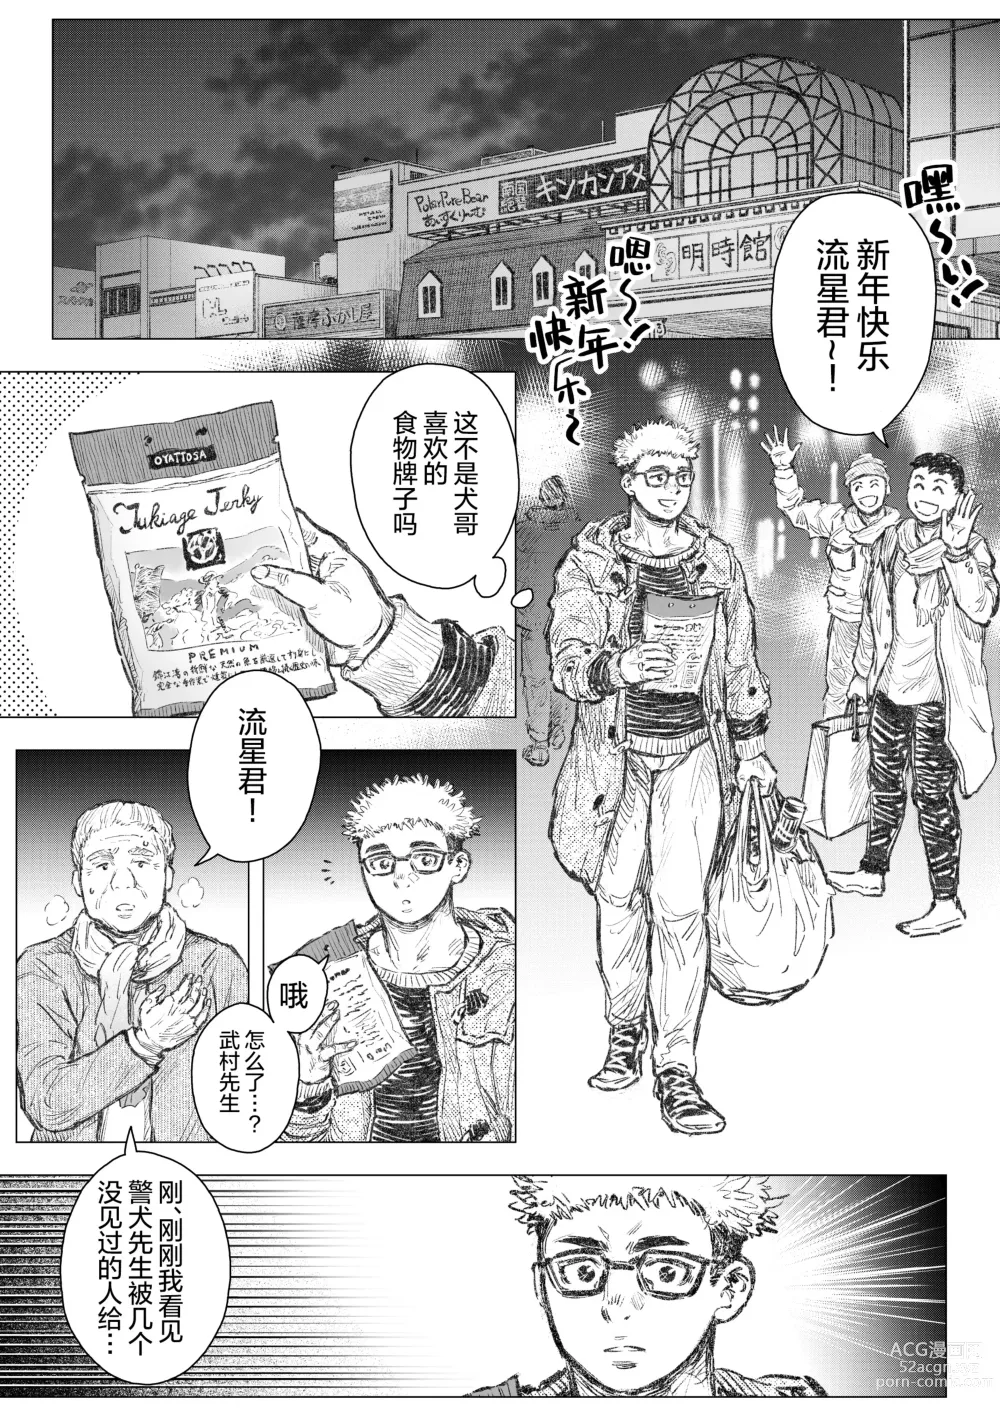 Page 4 of doujinshi 警犬巡查队队长②